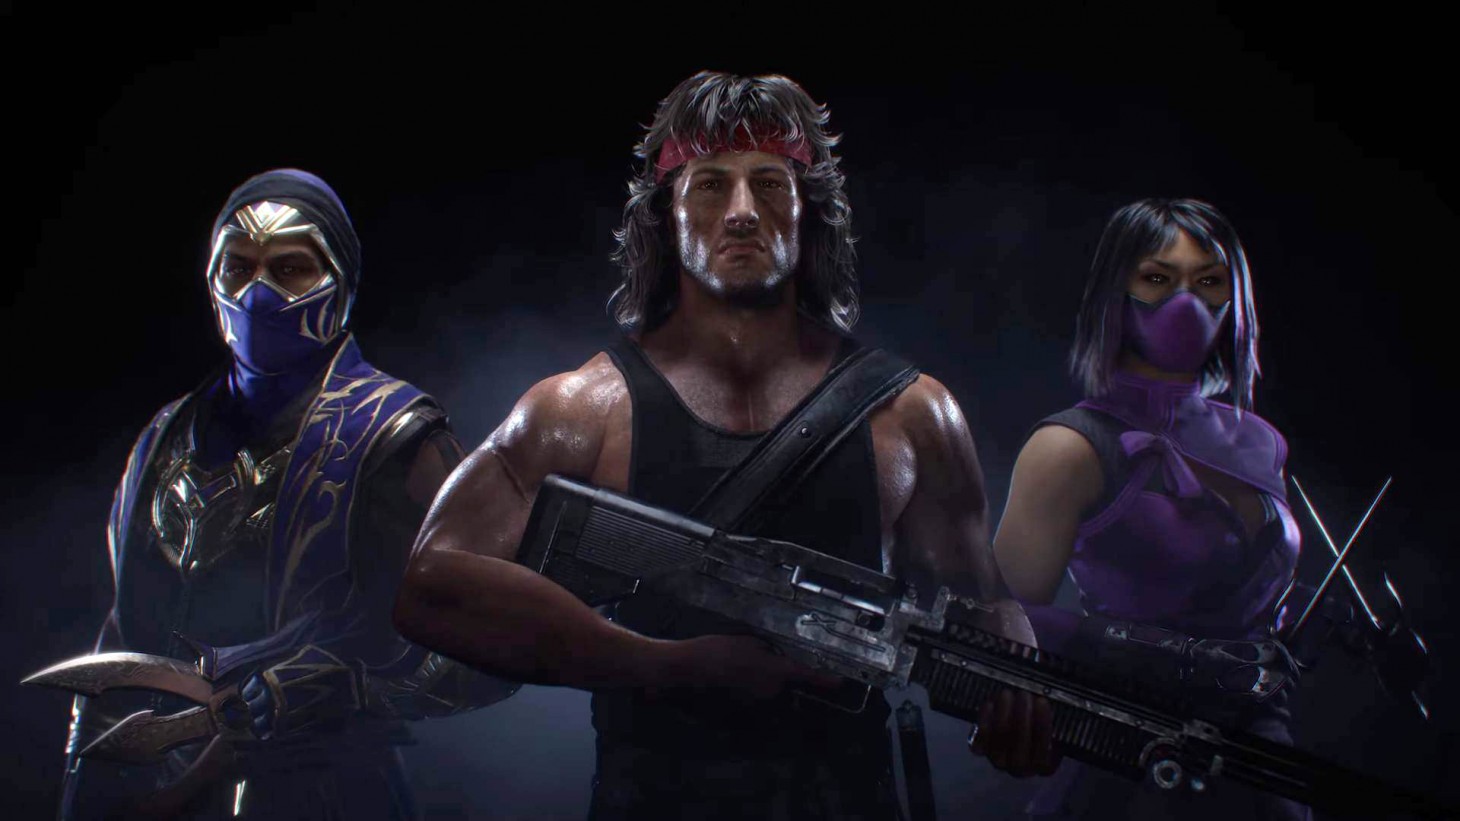 Mortal Kombat 11 Kombat Pack 2 includes Mileena, Rambo, and Rain - Polygon